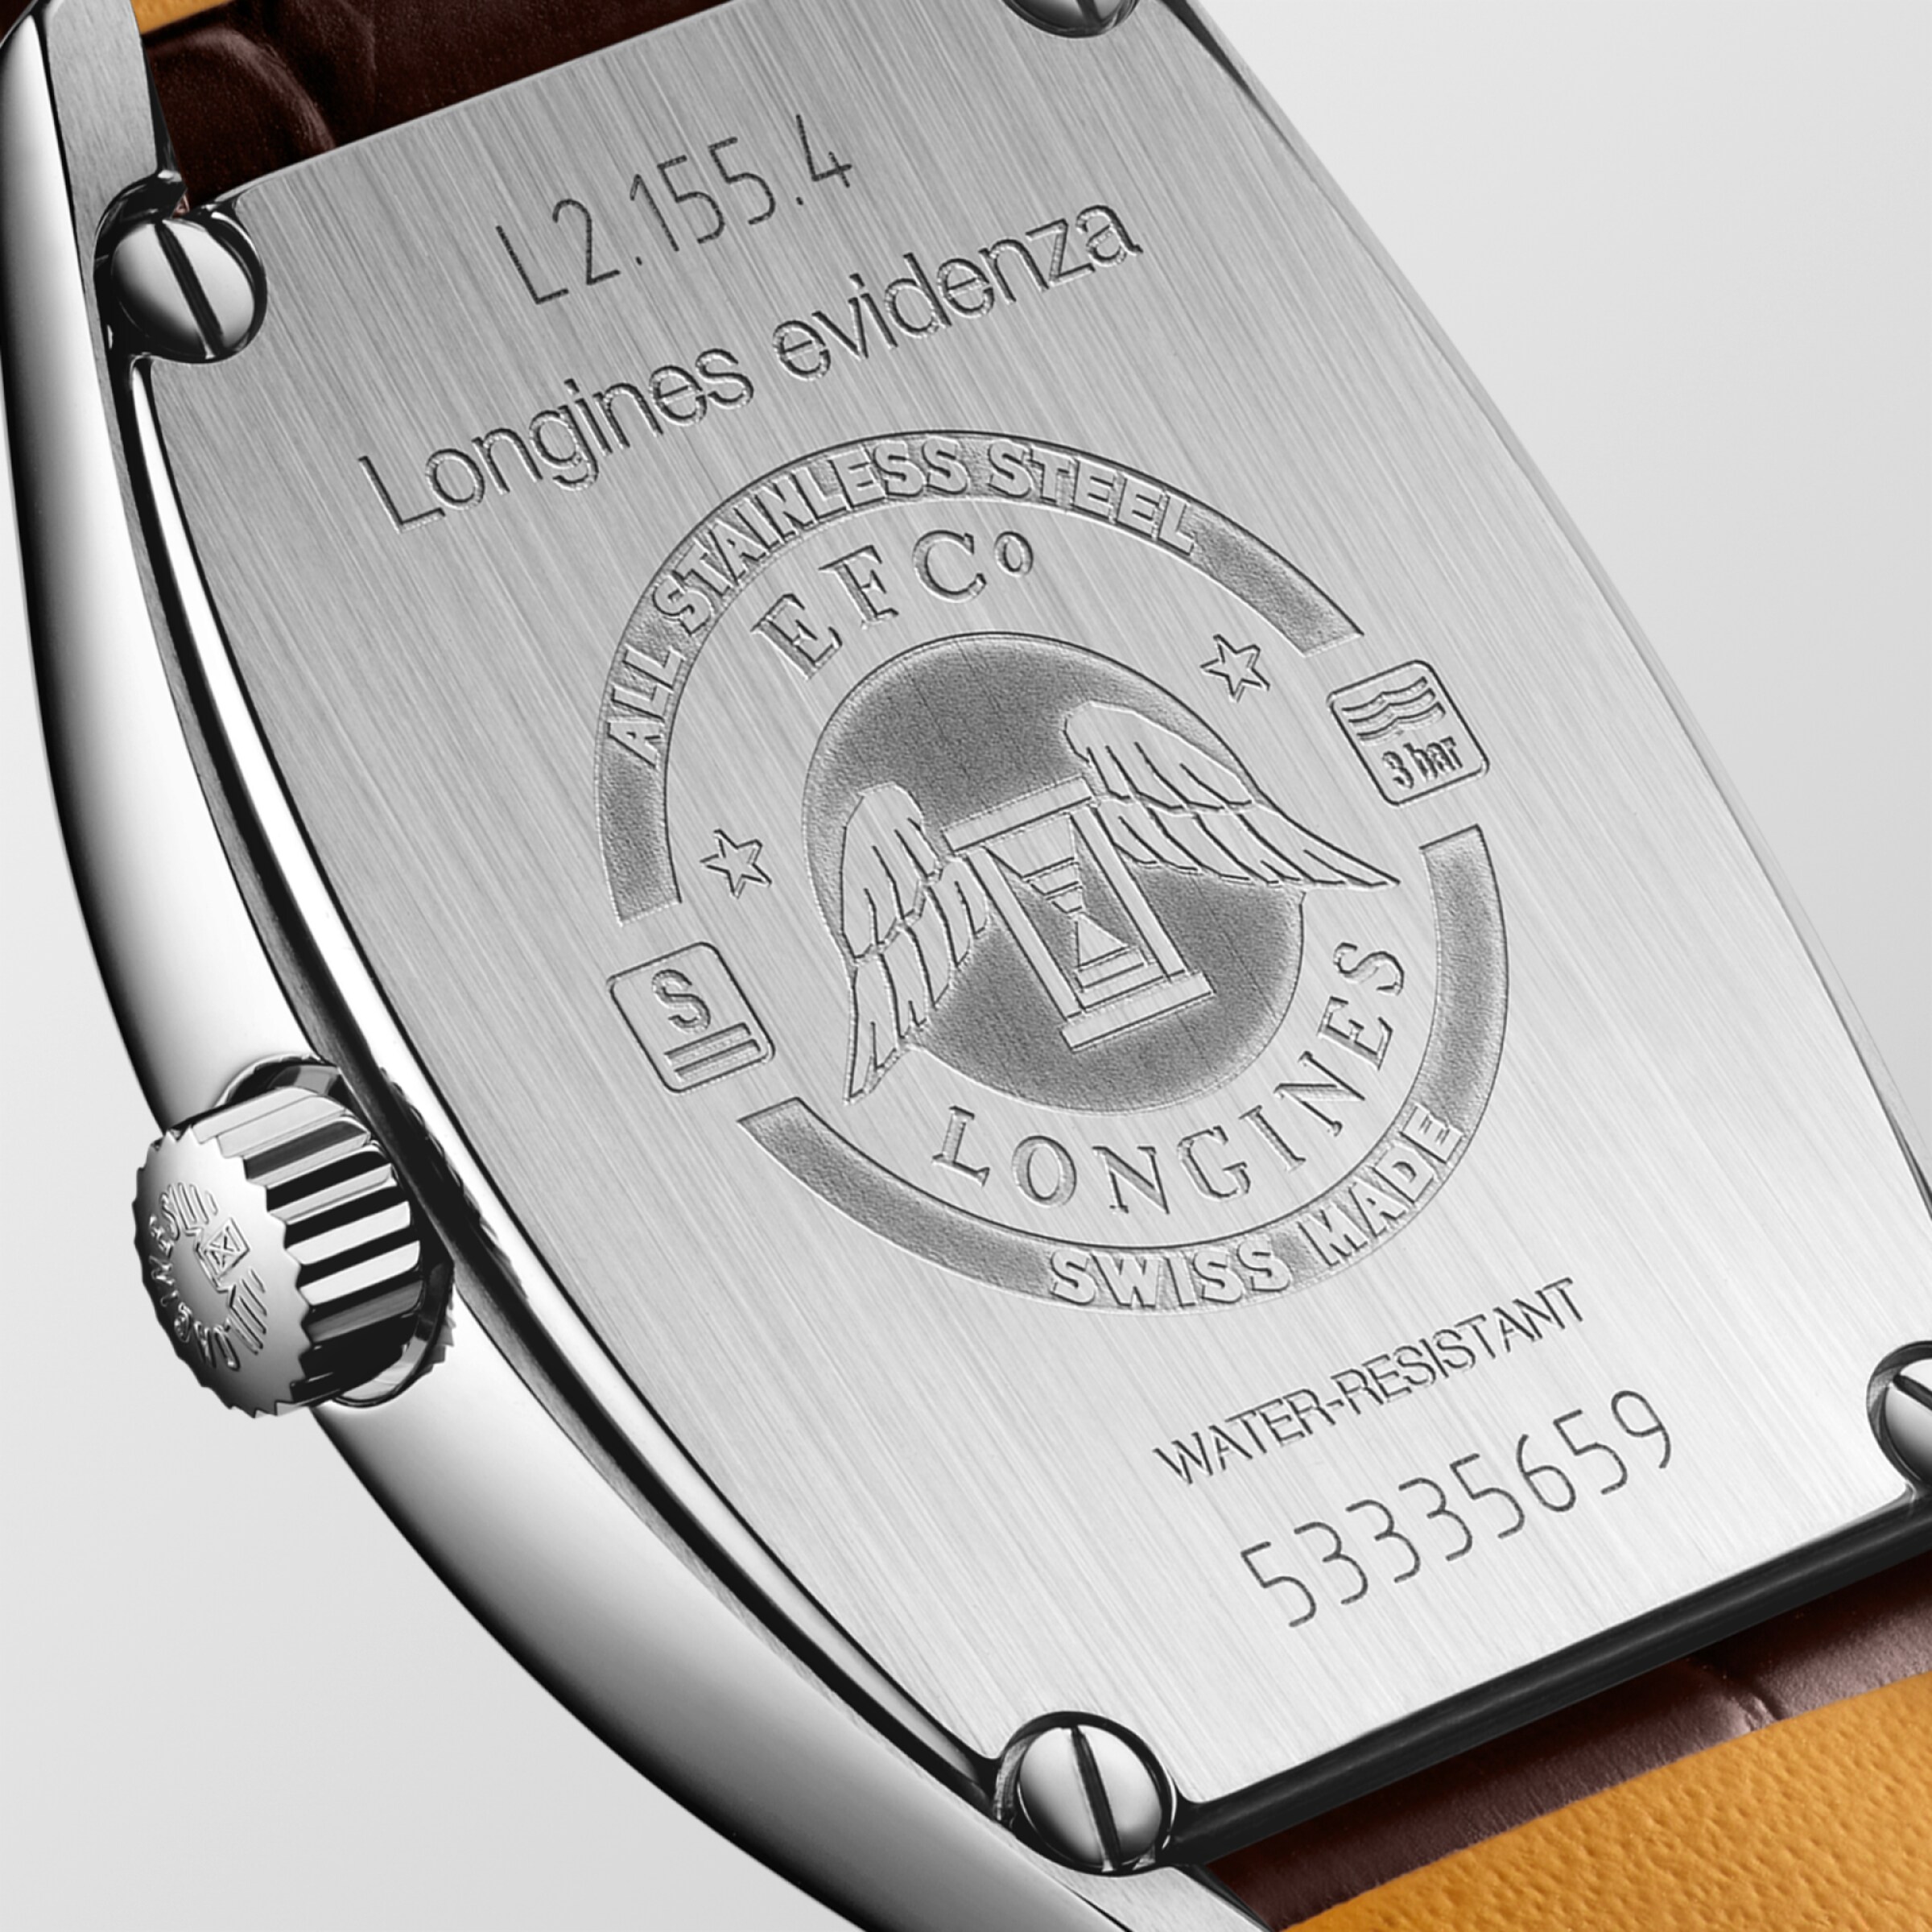 Longines EVIDENZA Quartz Stainless steel Watch - L2.155.4.71.5